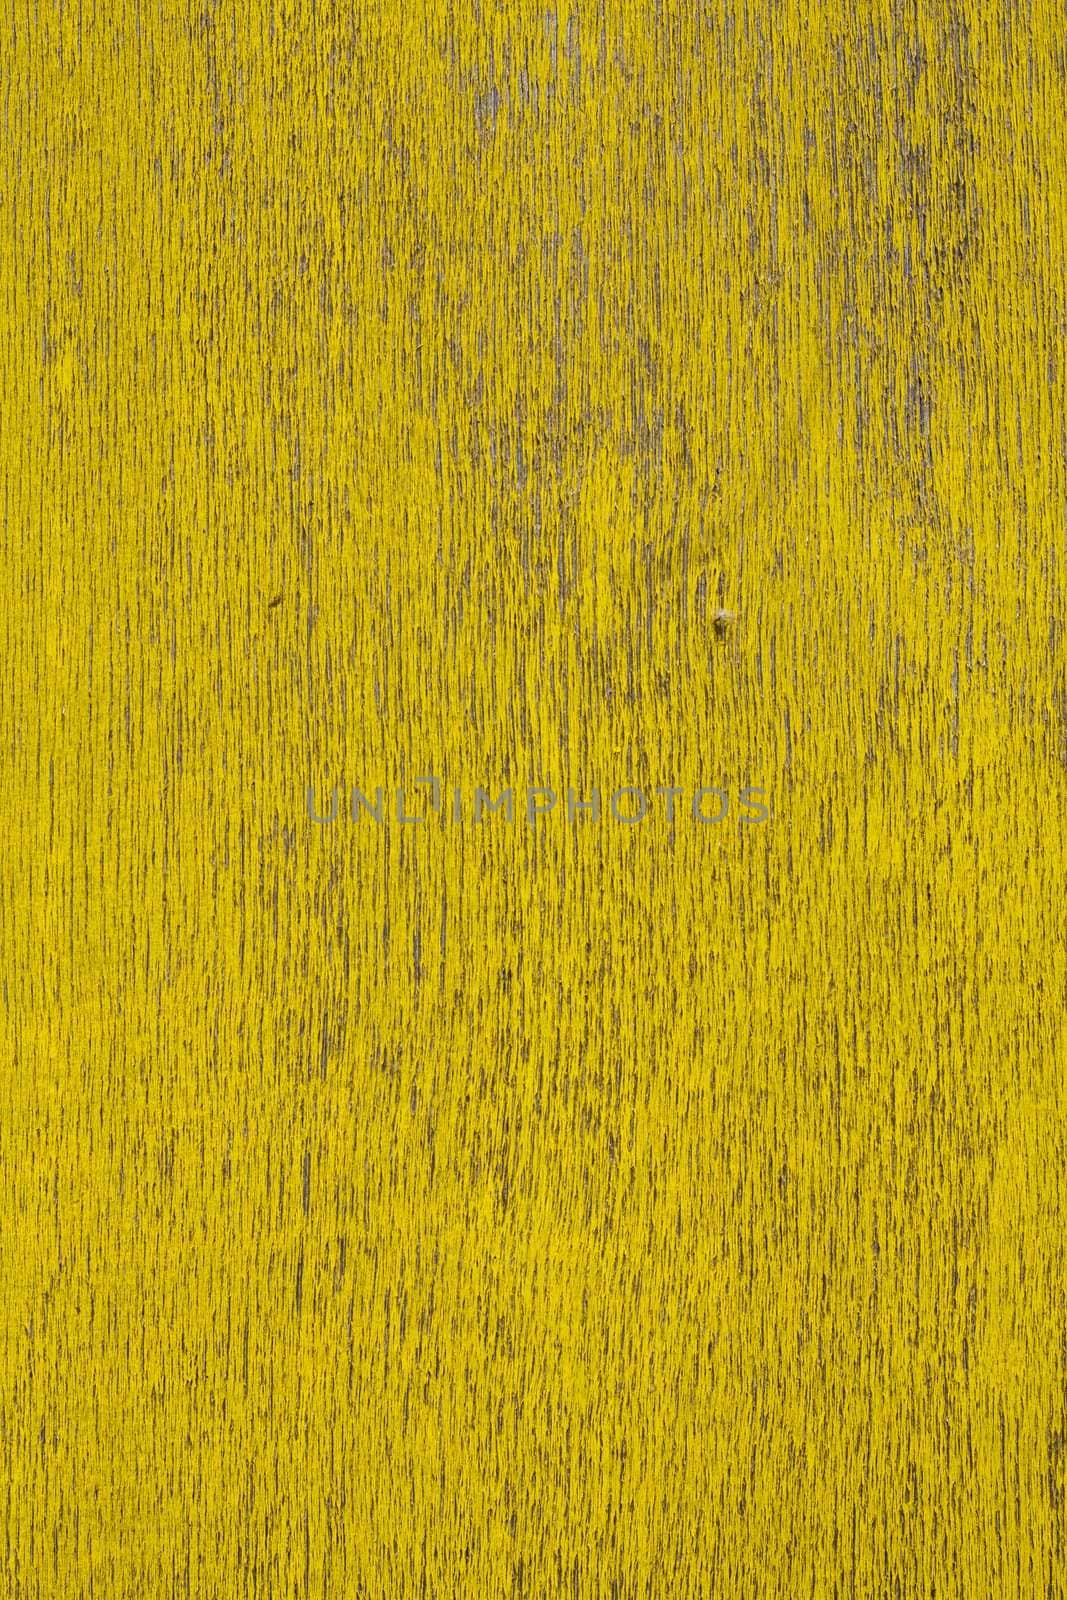 yellow wood wall by membio